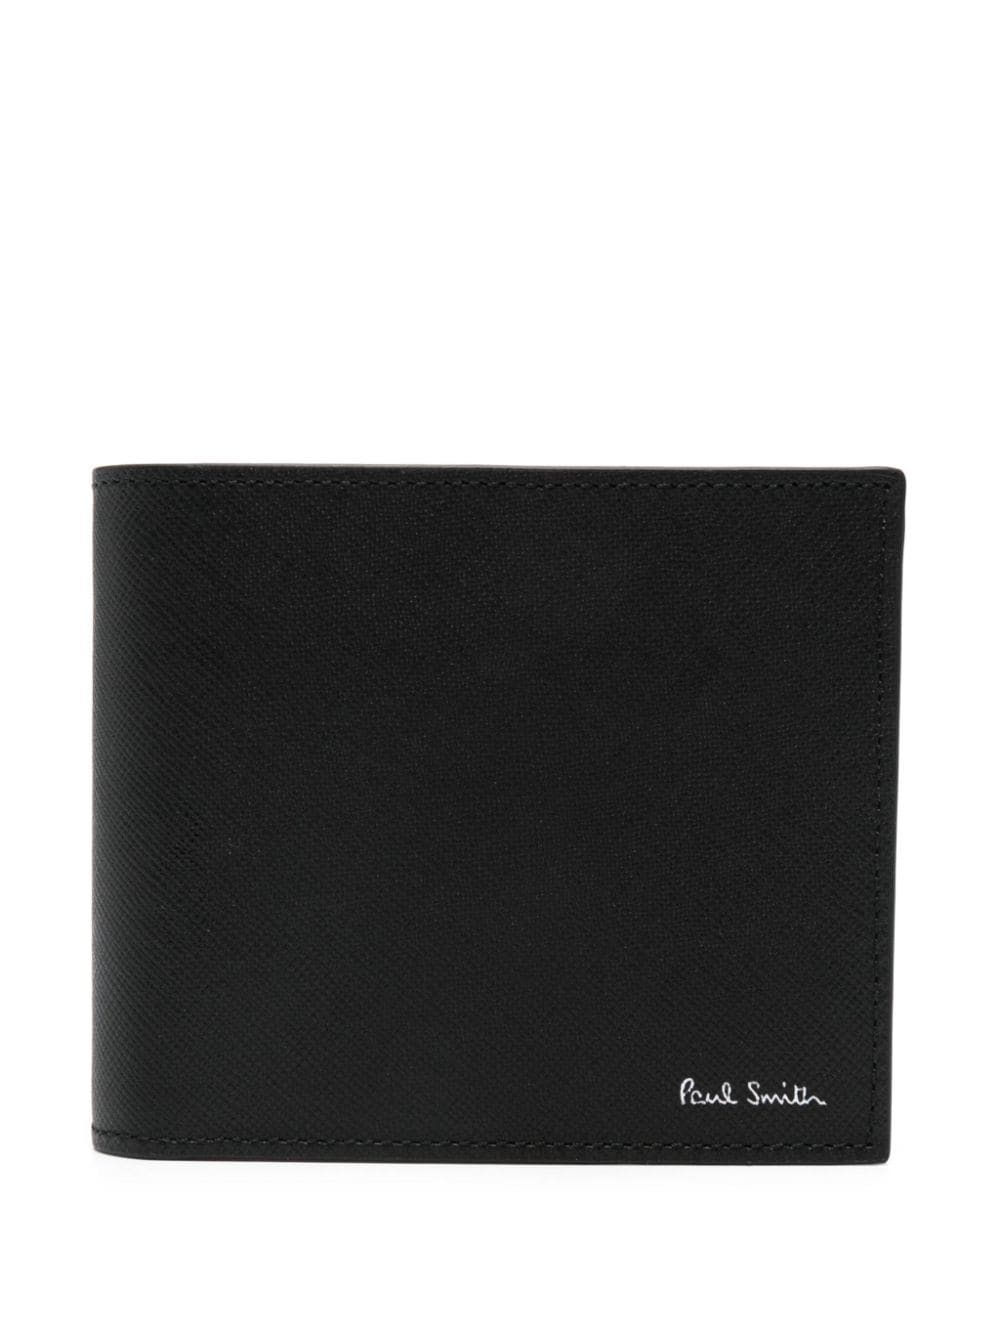 Paul Smith Signature Stripe Balloon leather wallet - Black von Paul Smith